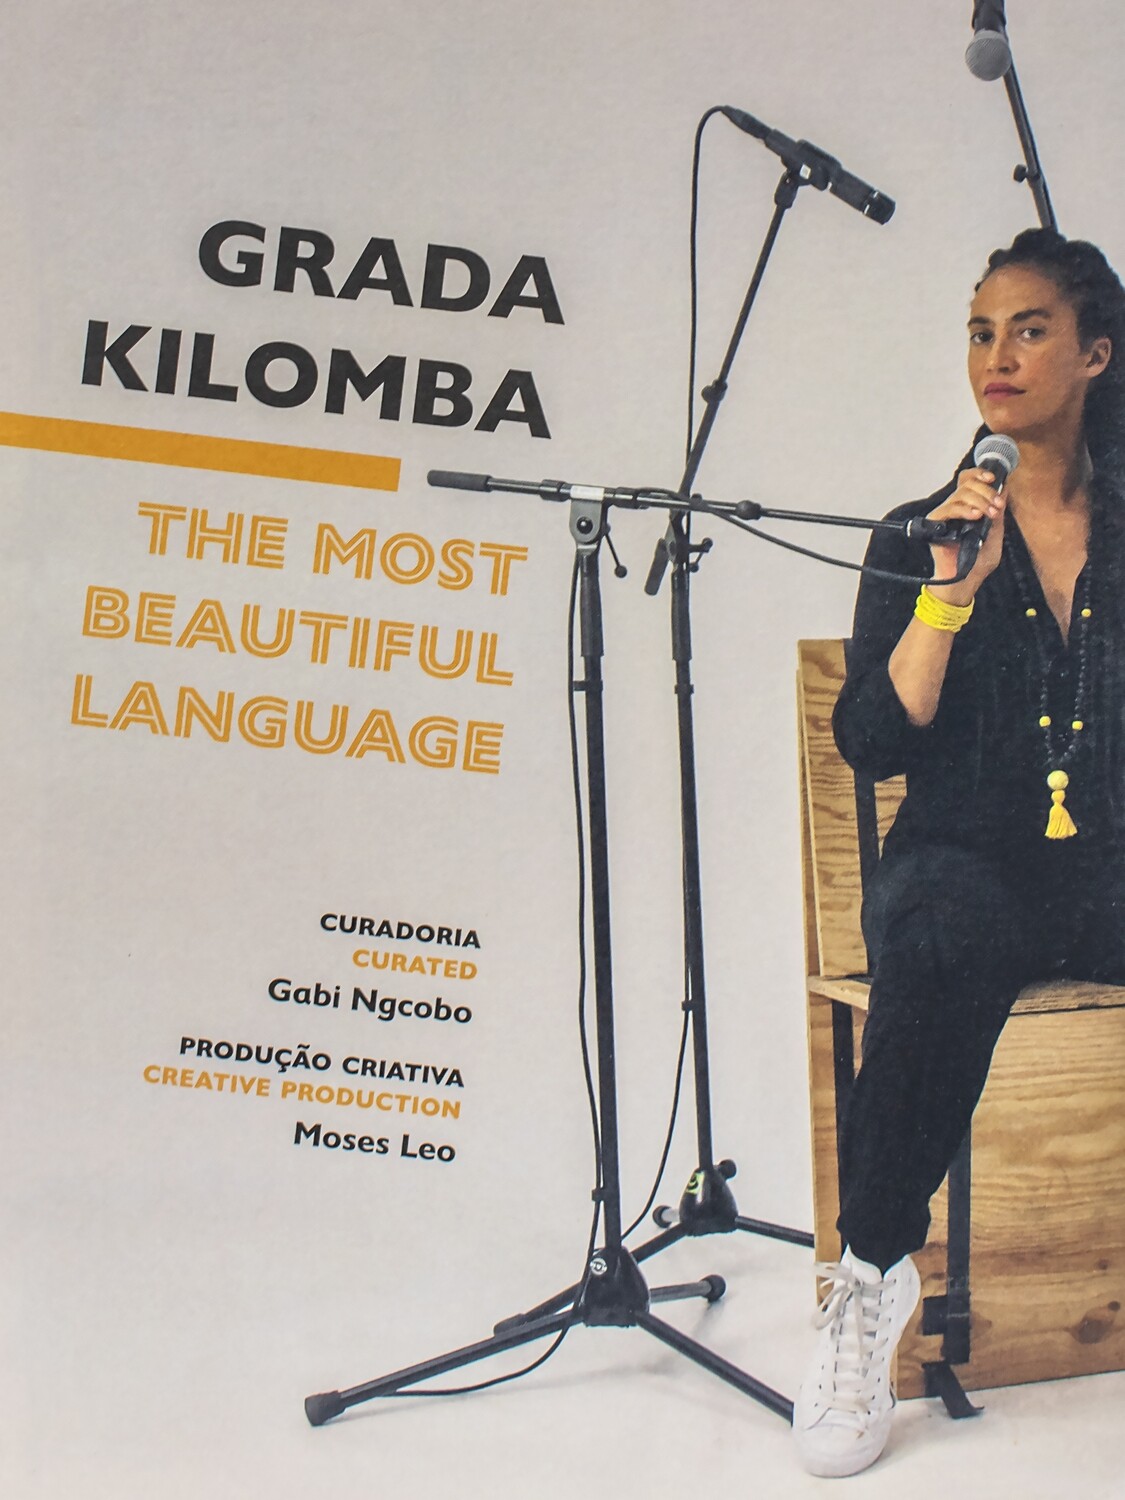 Grada Kilomba: The Most Beautiful Language